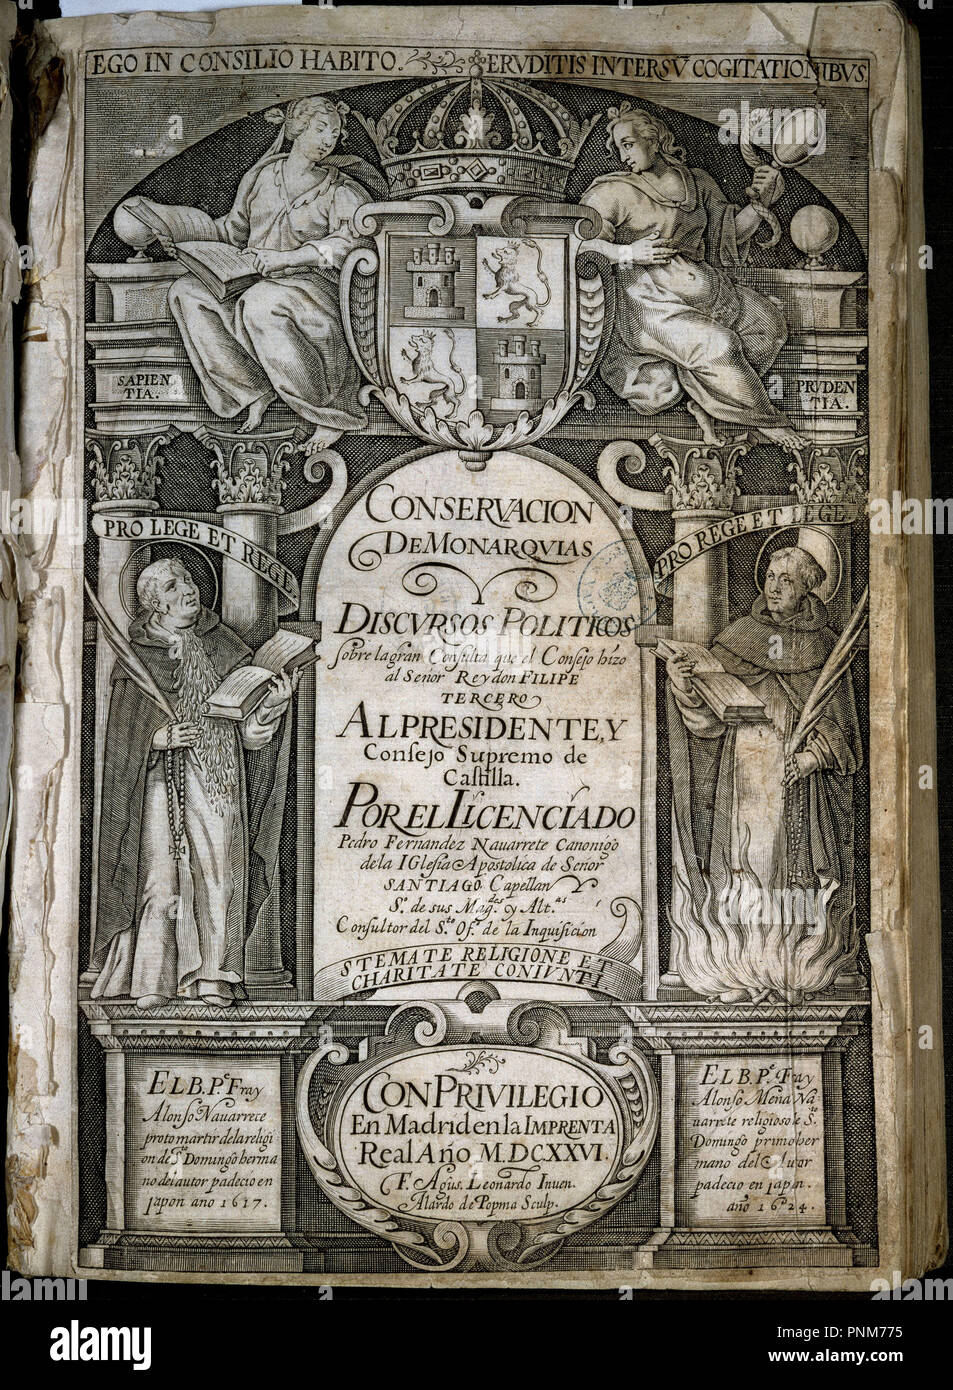 PORTADA DEL LIBRO CONSERVACION DE MONARQUIAS - 1626. Autore: FERNANDEZ NAVARRETE PEDRO. Posizione: Biblioteca Nacional-COLECCION. MADRID. Spagna. Foto Stock